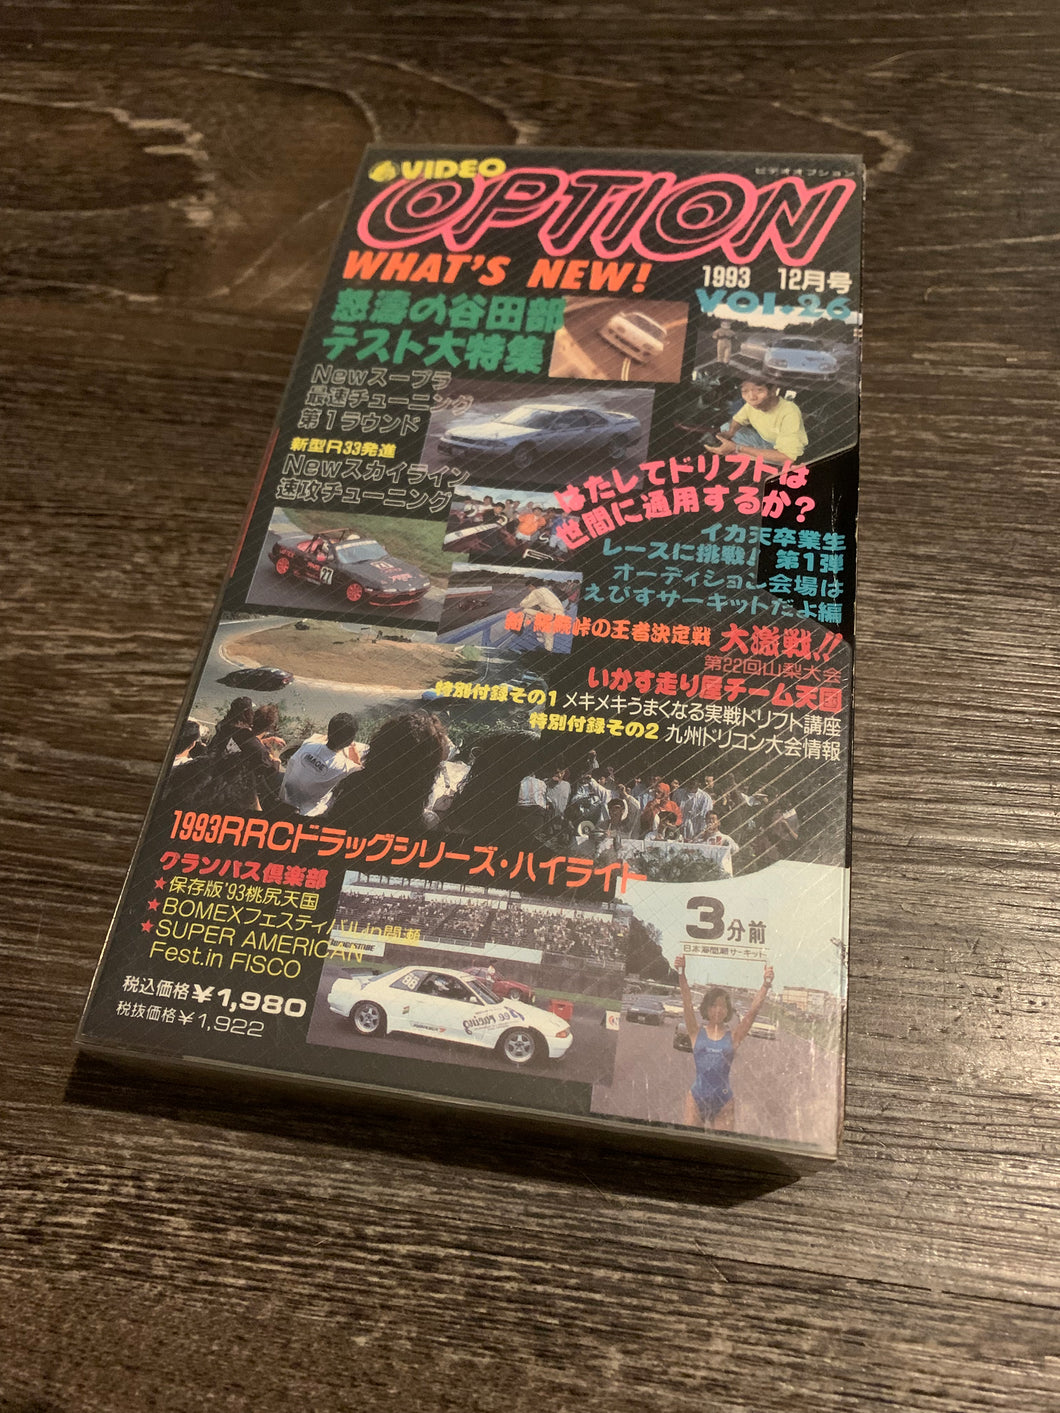 Option VHS Nov. 1993 Volume 26